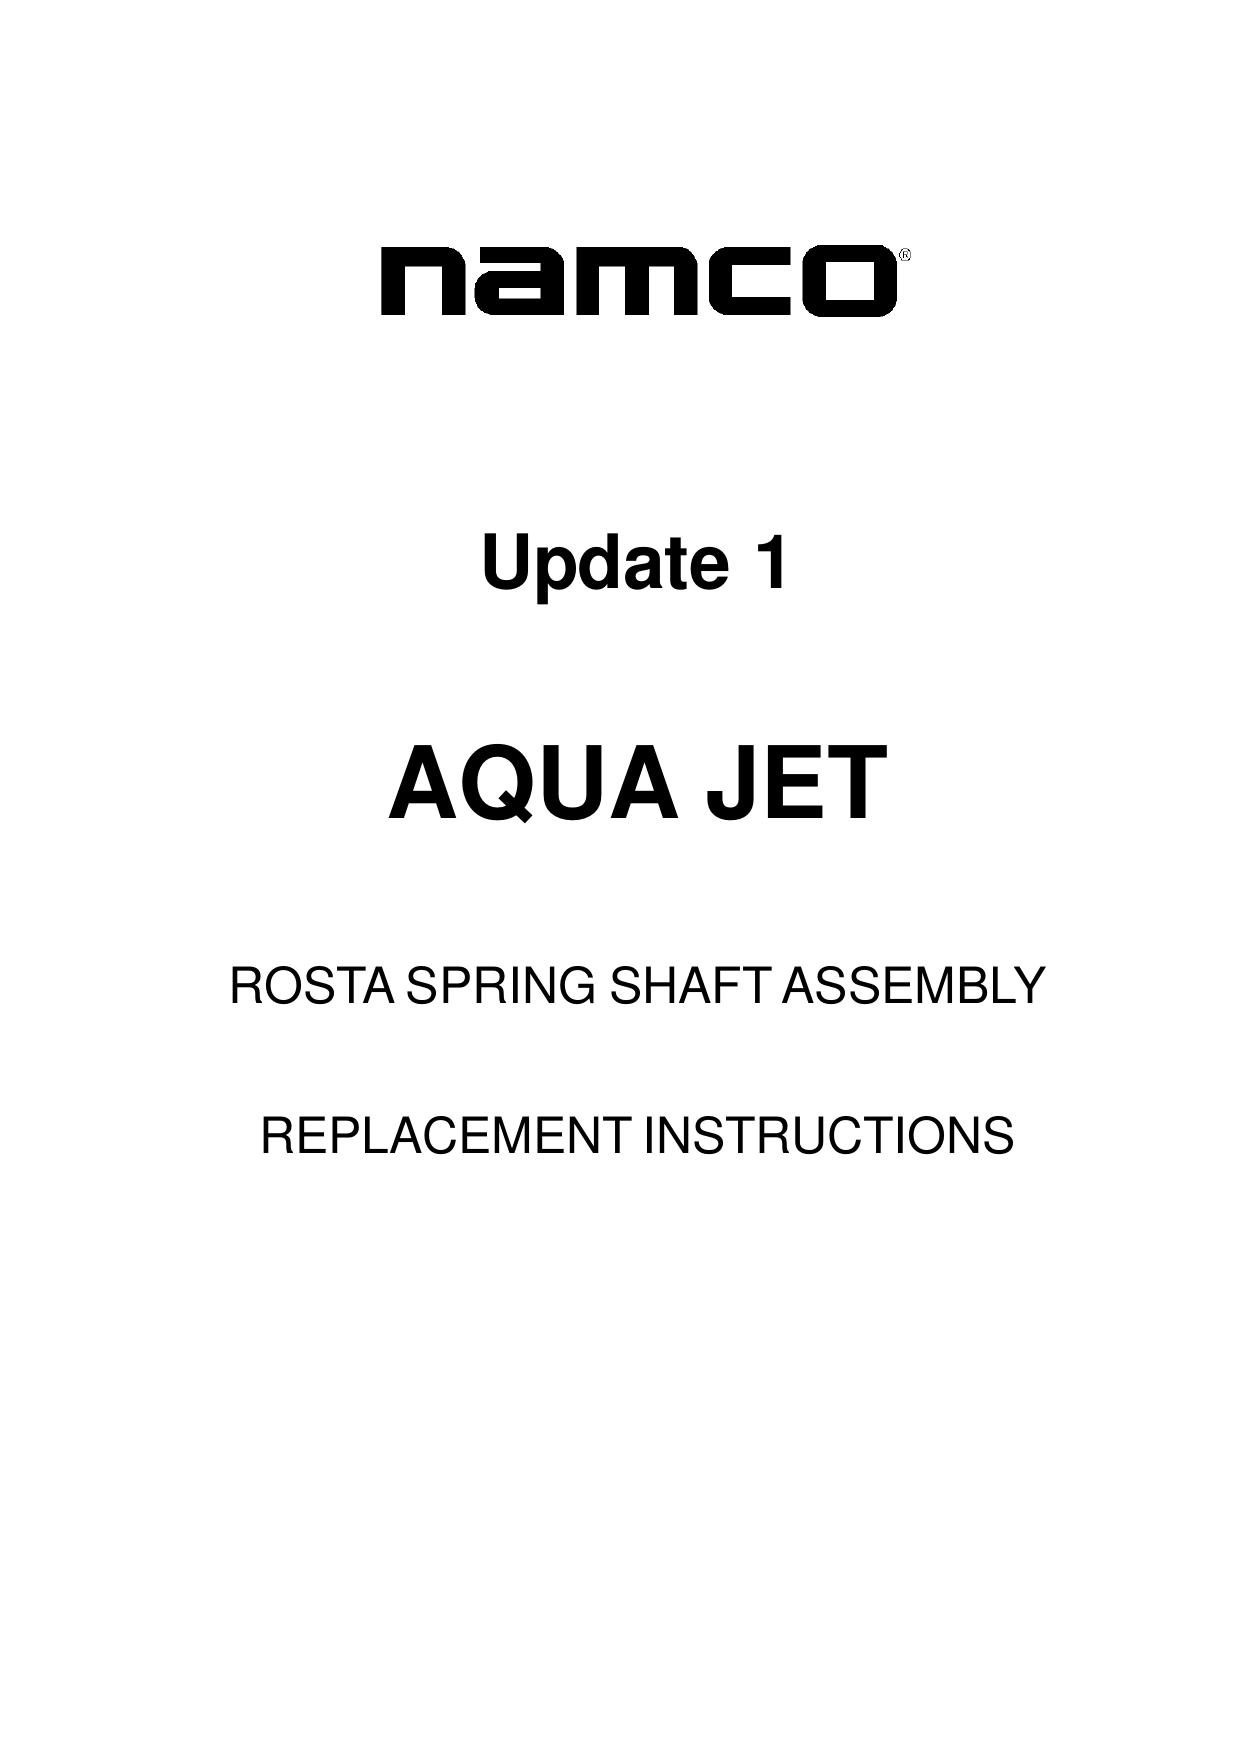 Aqua Jet Update 1